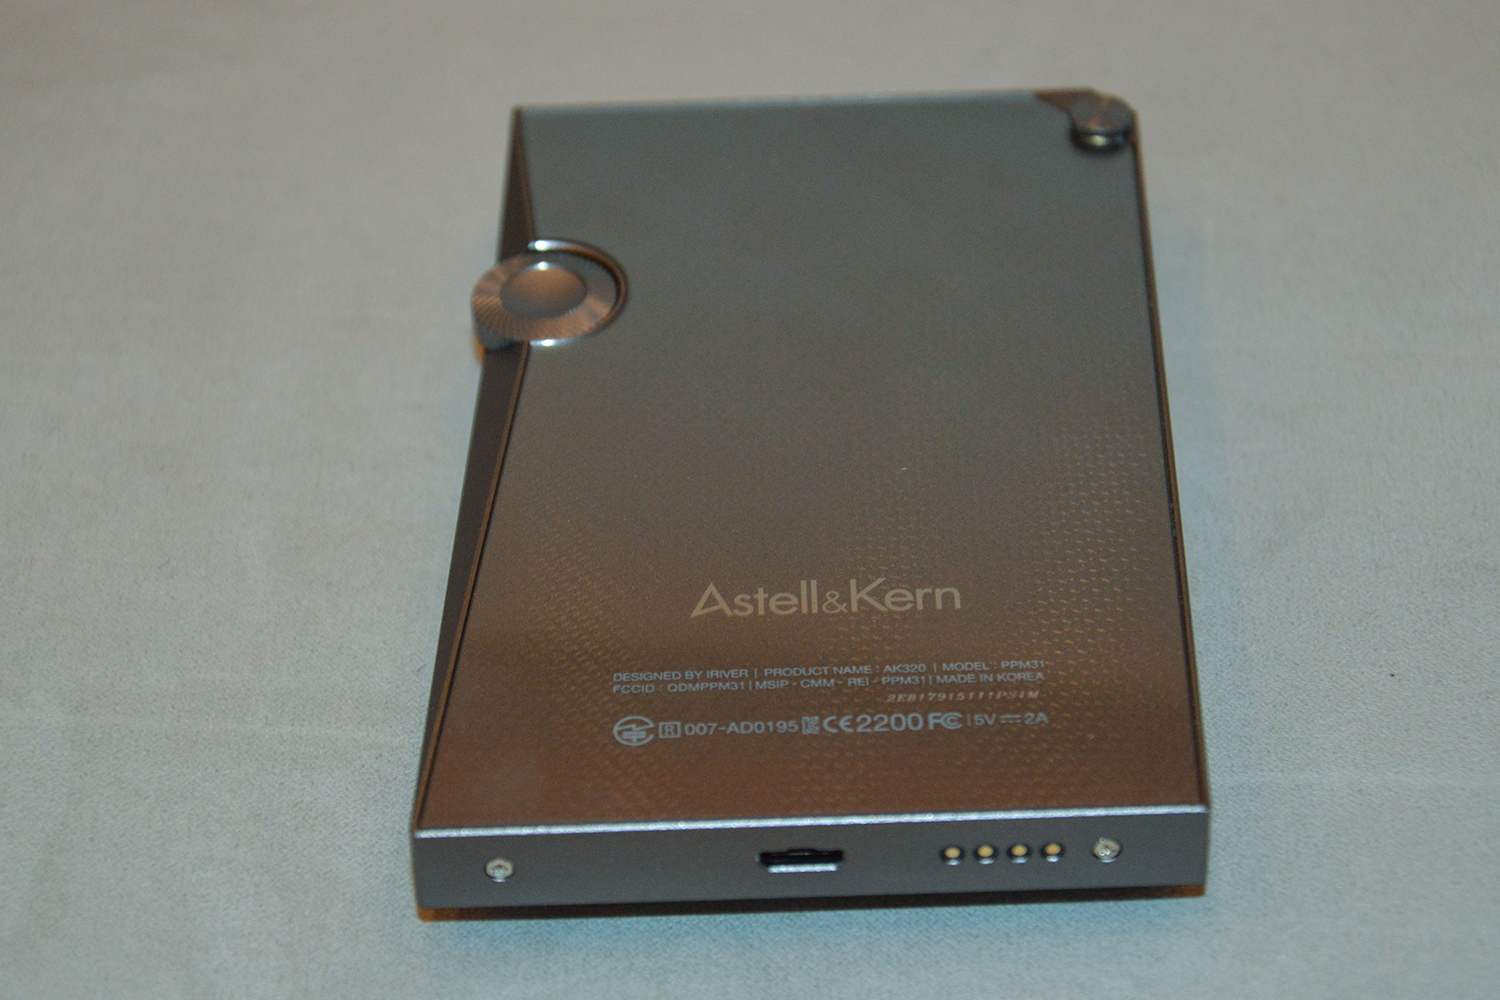 astellkern ak320 ak380 copper portable hires players astell kern hi res 6